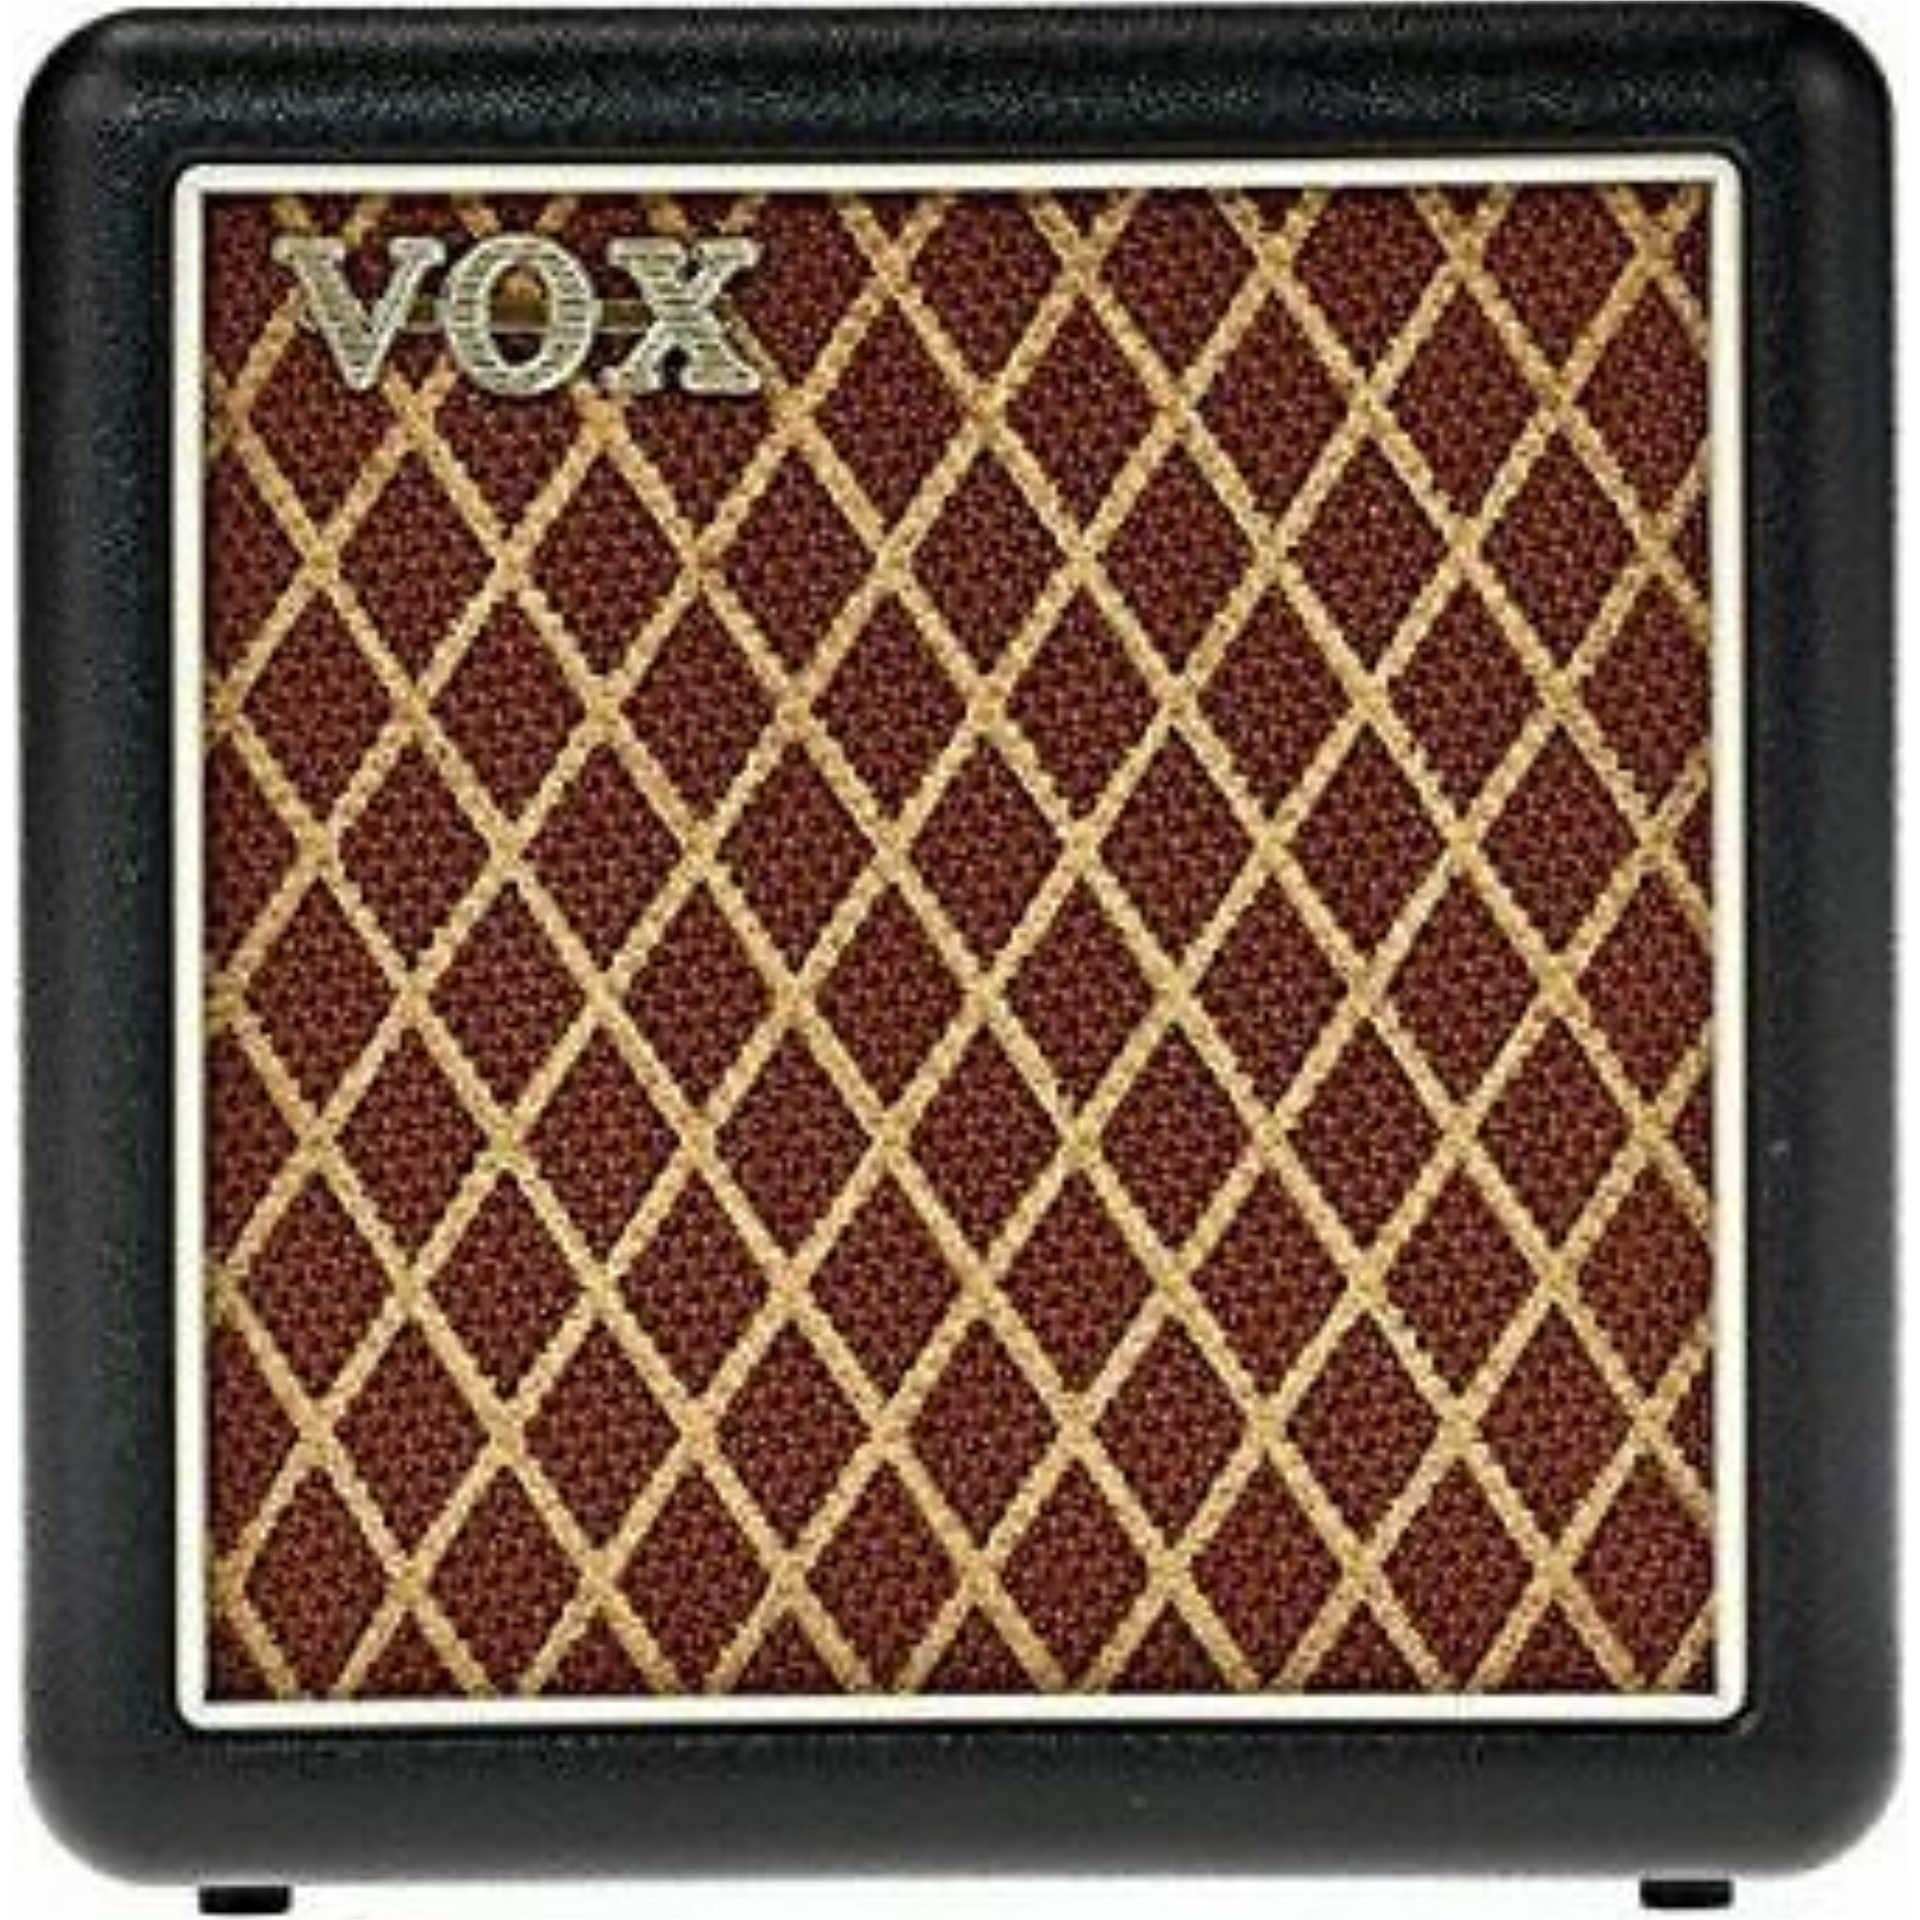 Vox Amplug2 Cabinet Powered Speaker